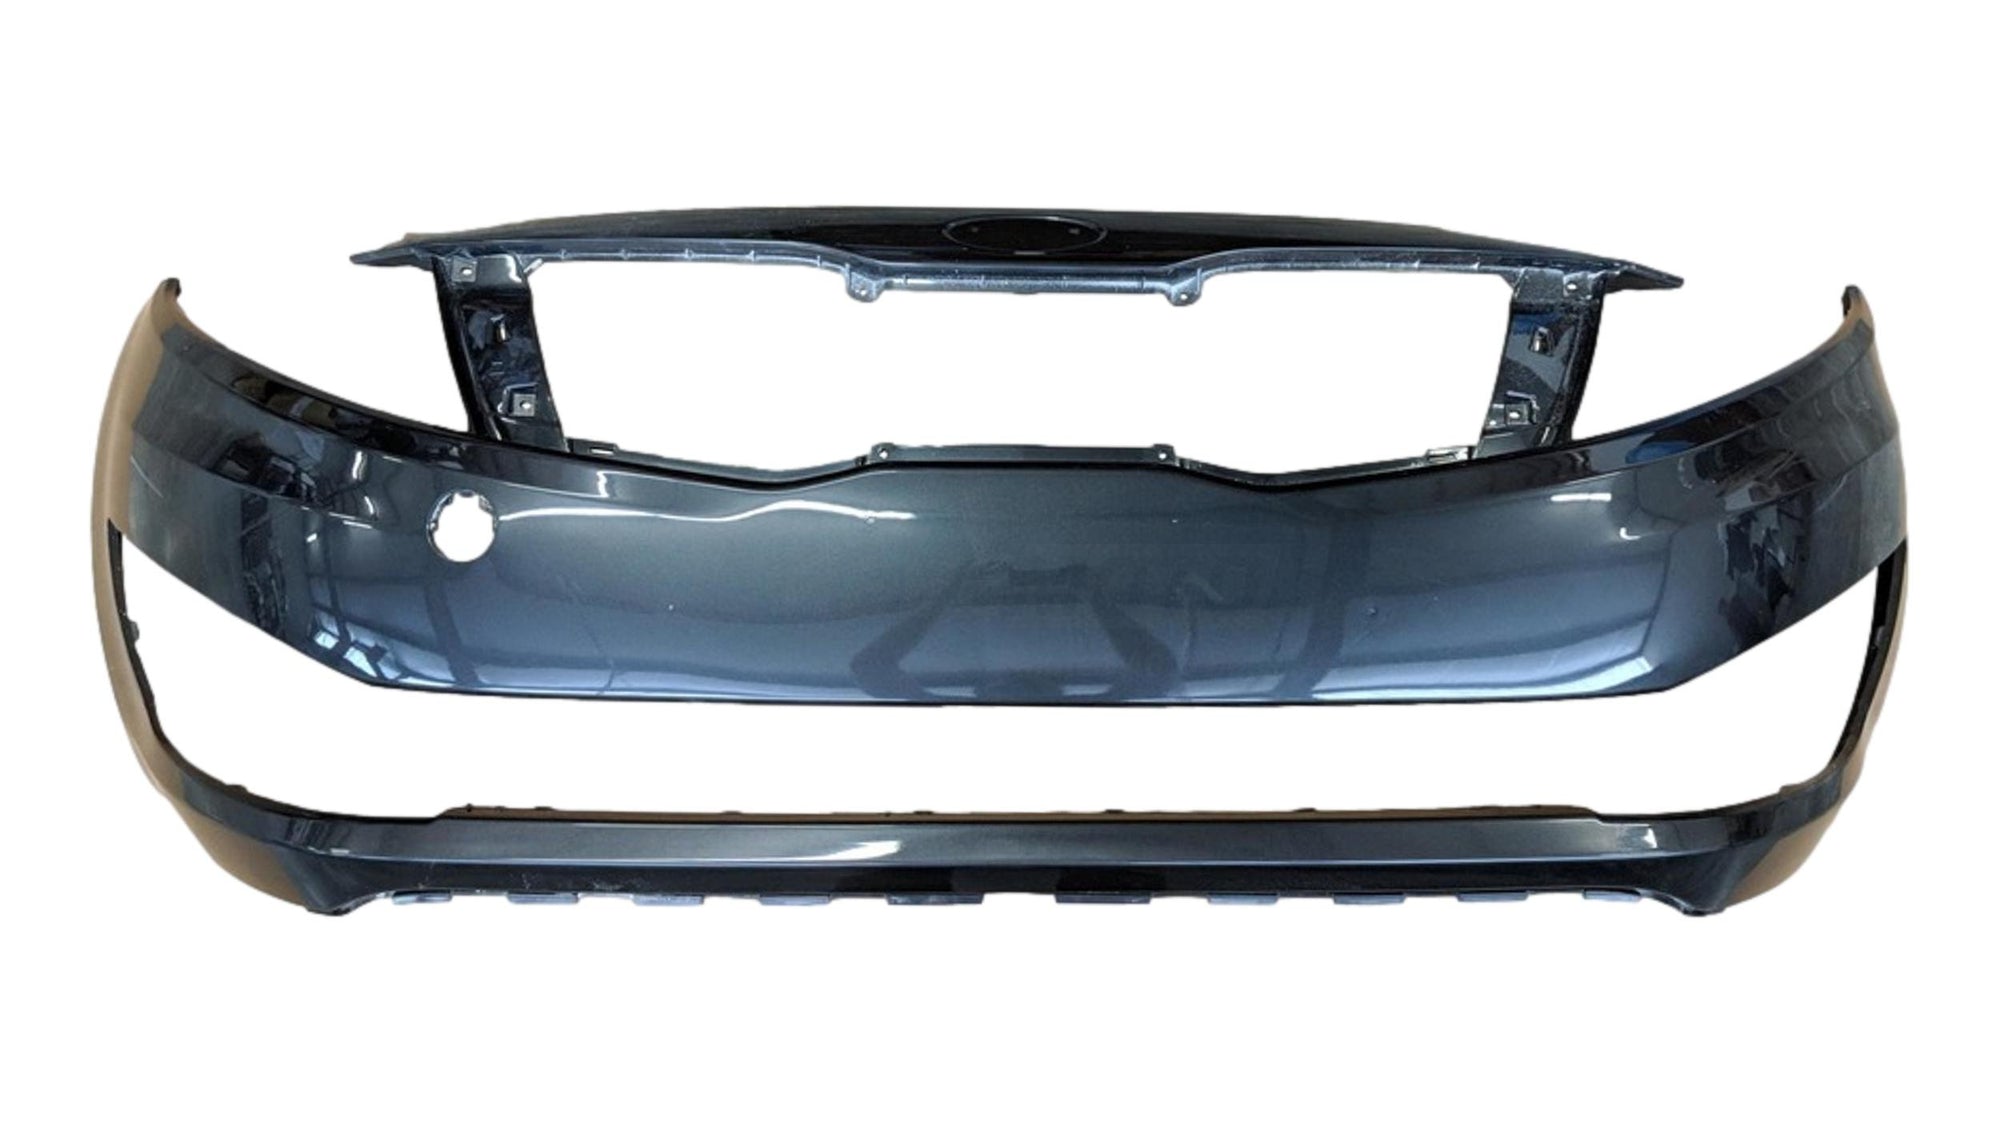 2011 Kia Optima - Front Bumper Painted (Korean Built; EX/LX Models) Graphite Metallic (ABT) 865112T001 KI1000155